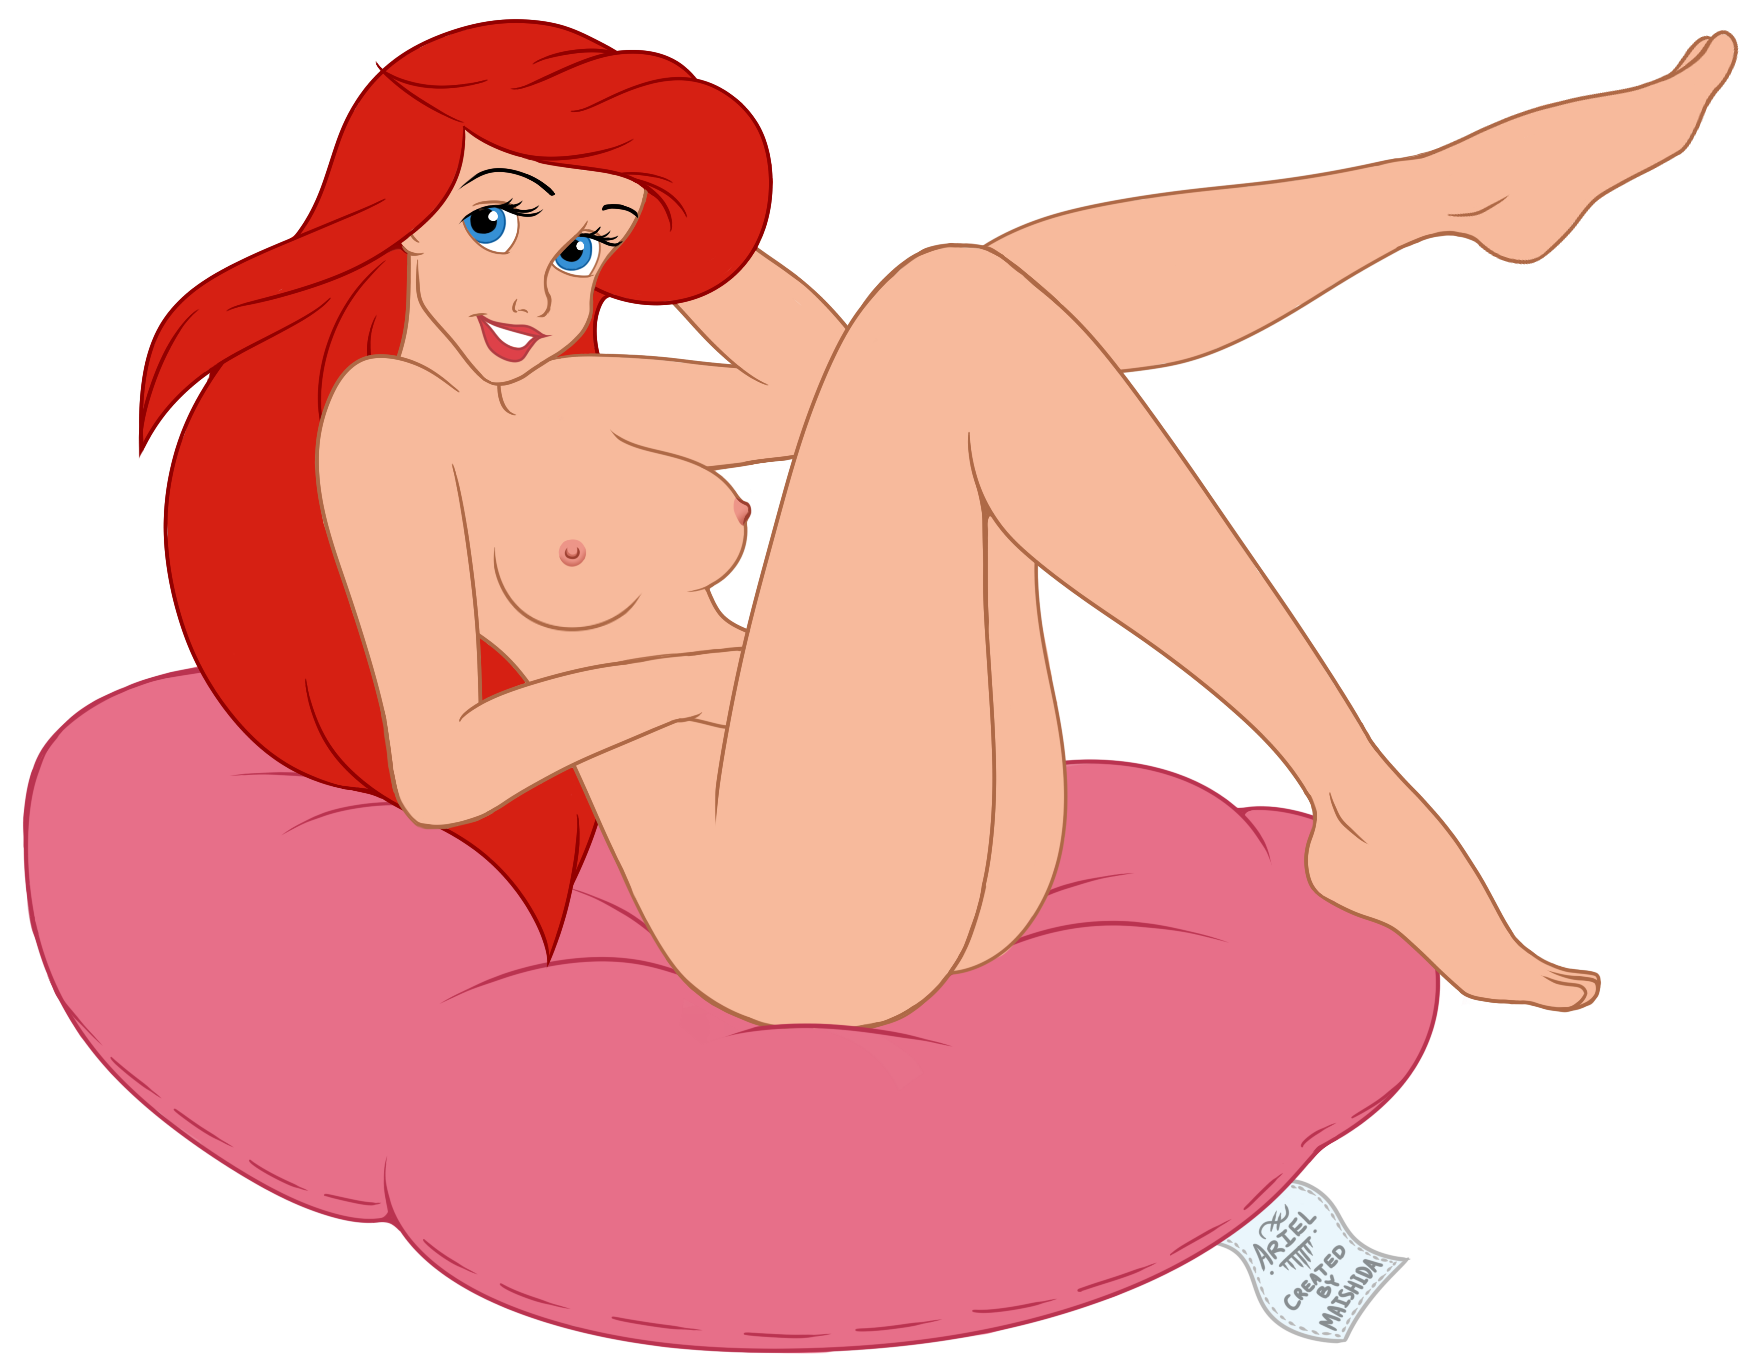 Naked Ariel on a Pillow by Maishida34 - Hentai Foundry.